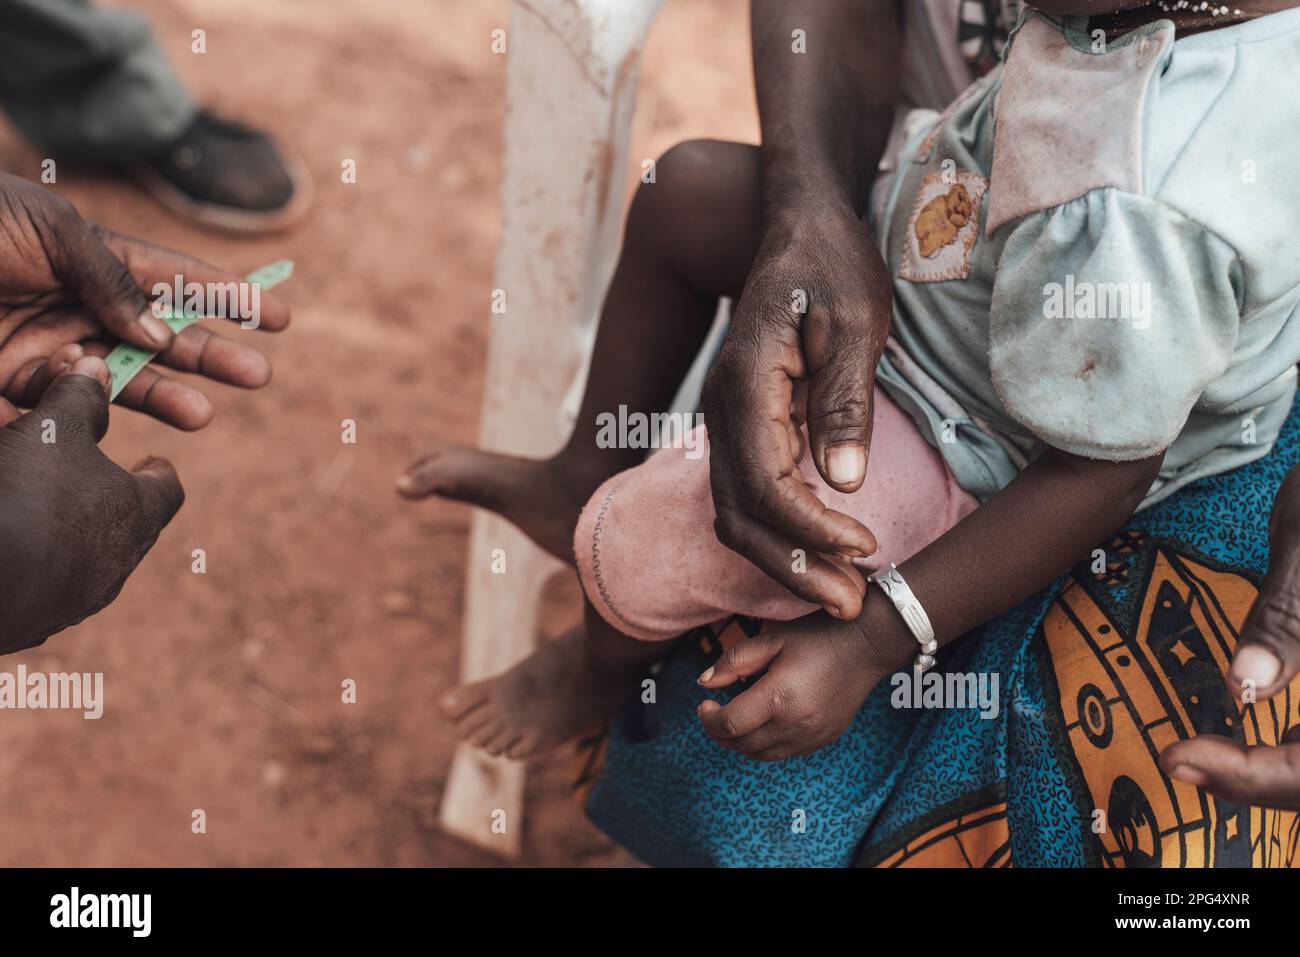 Ouagadougou, Burkina Faso. Medicine and community health Stock Photo